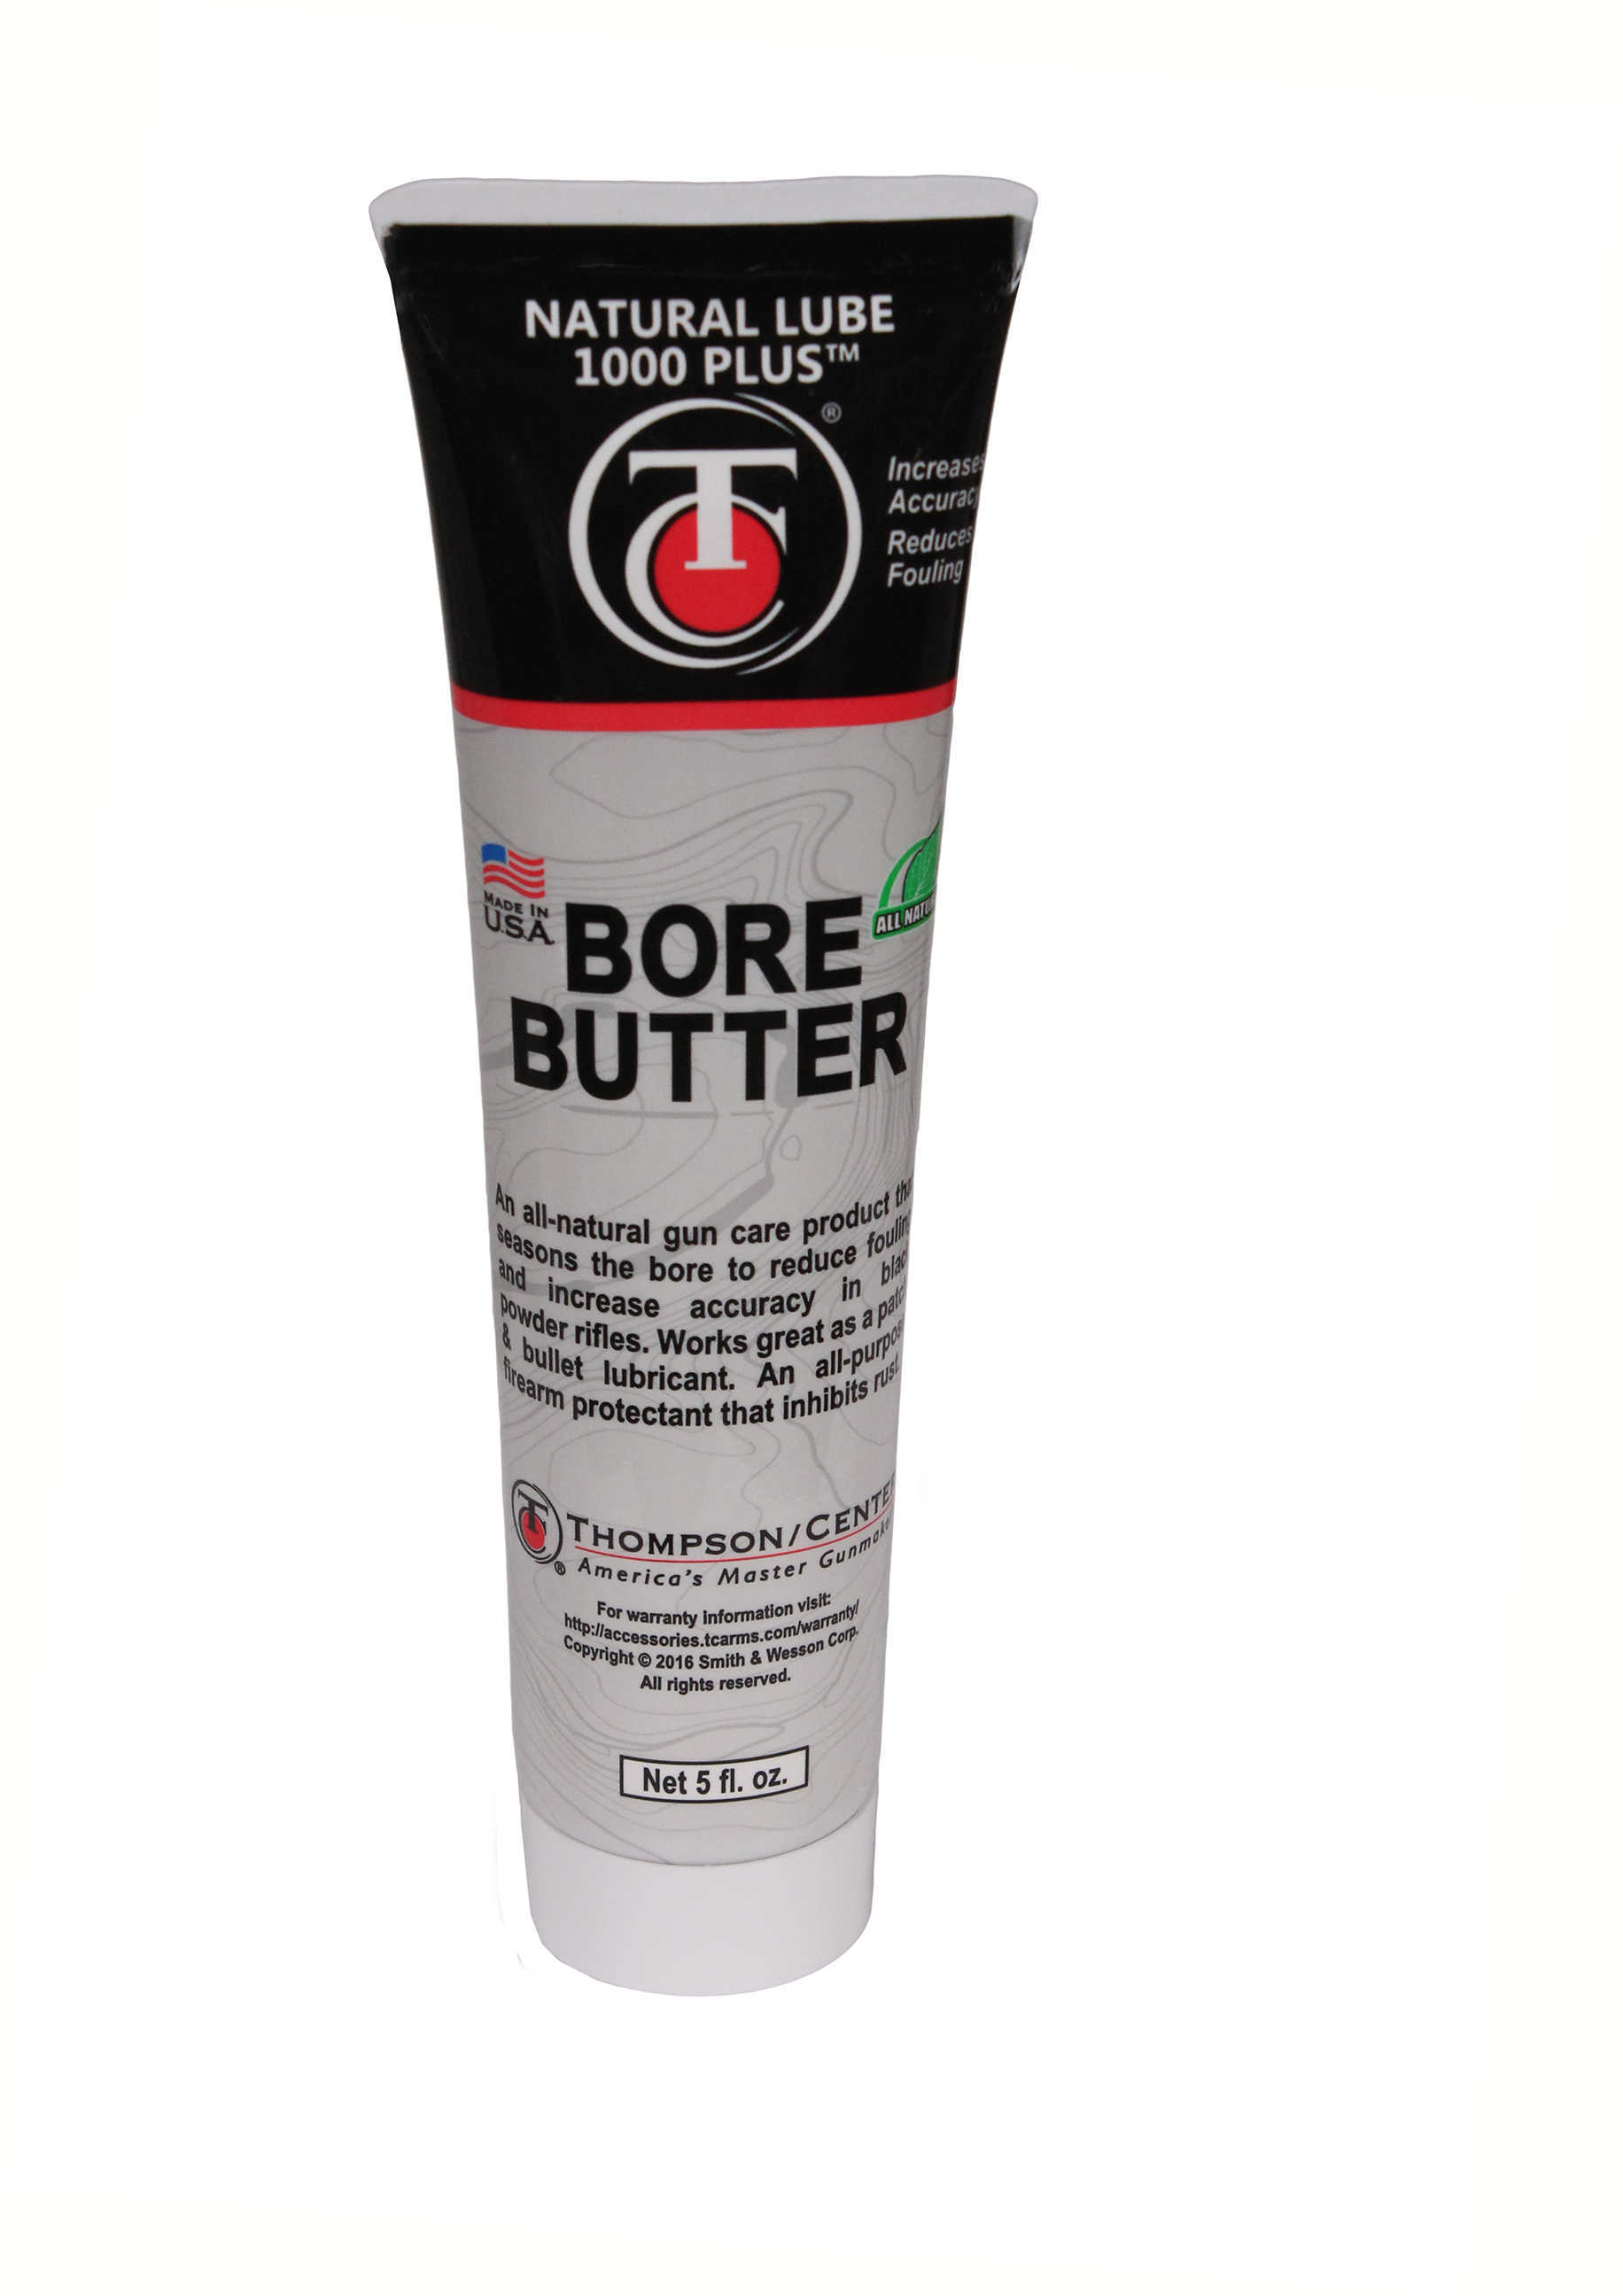 T/C Natural Lube Bore Butter Scent 5 oz. Model: 31007309